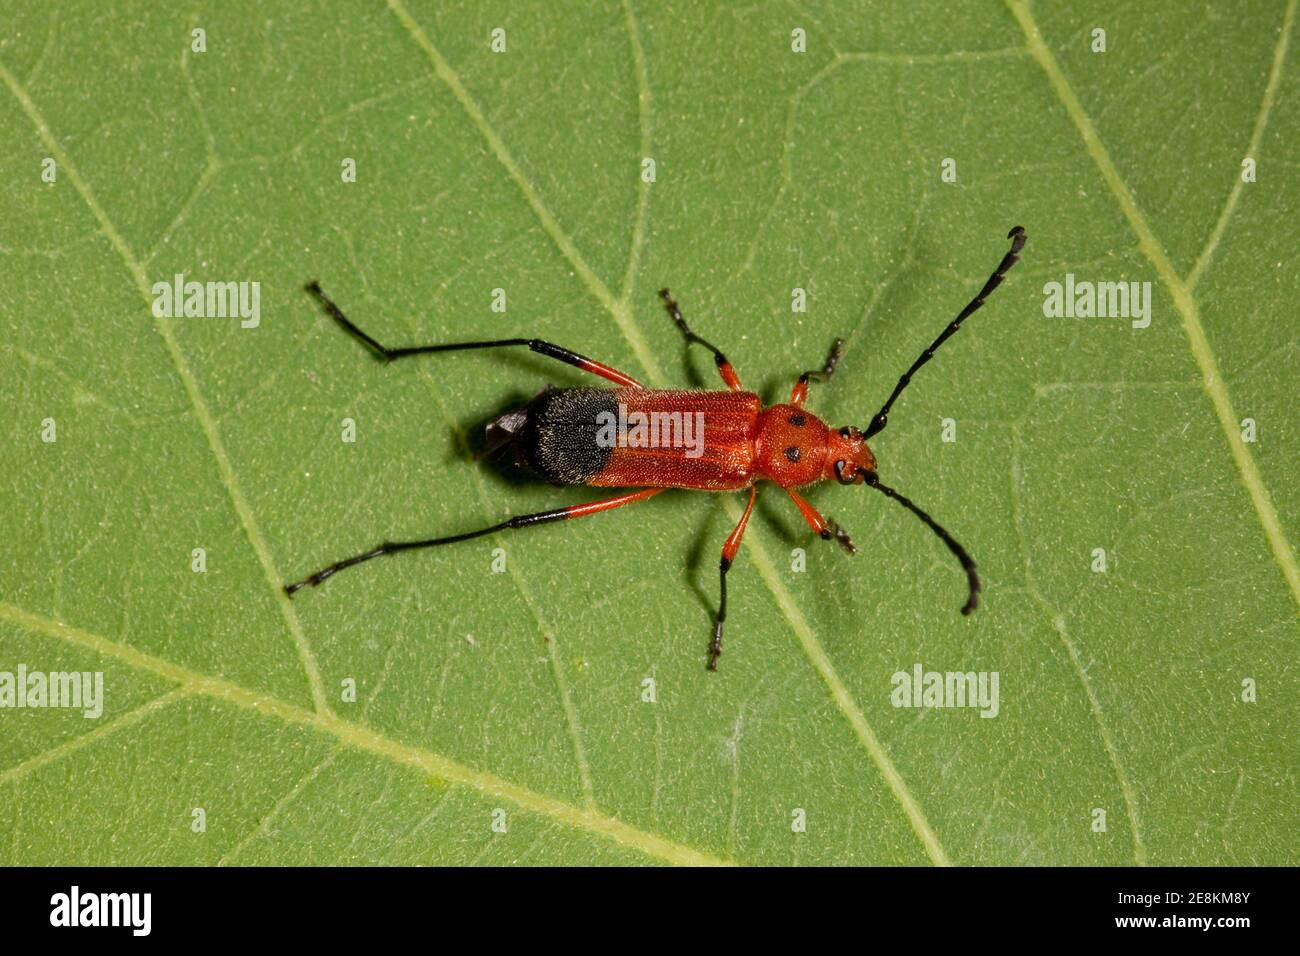 Langhornkäfer, Rhodoleptus femoratus, Cerambycidae. Gehäuselänge 12 mm. Lycid-Mimic. Stockfoto